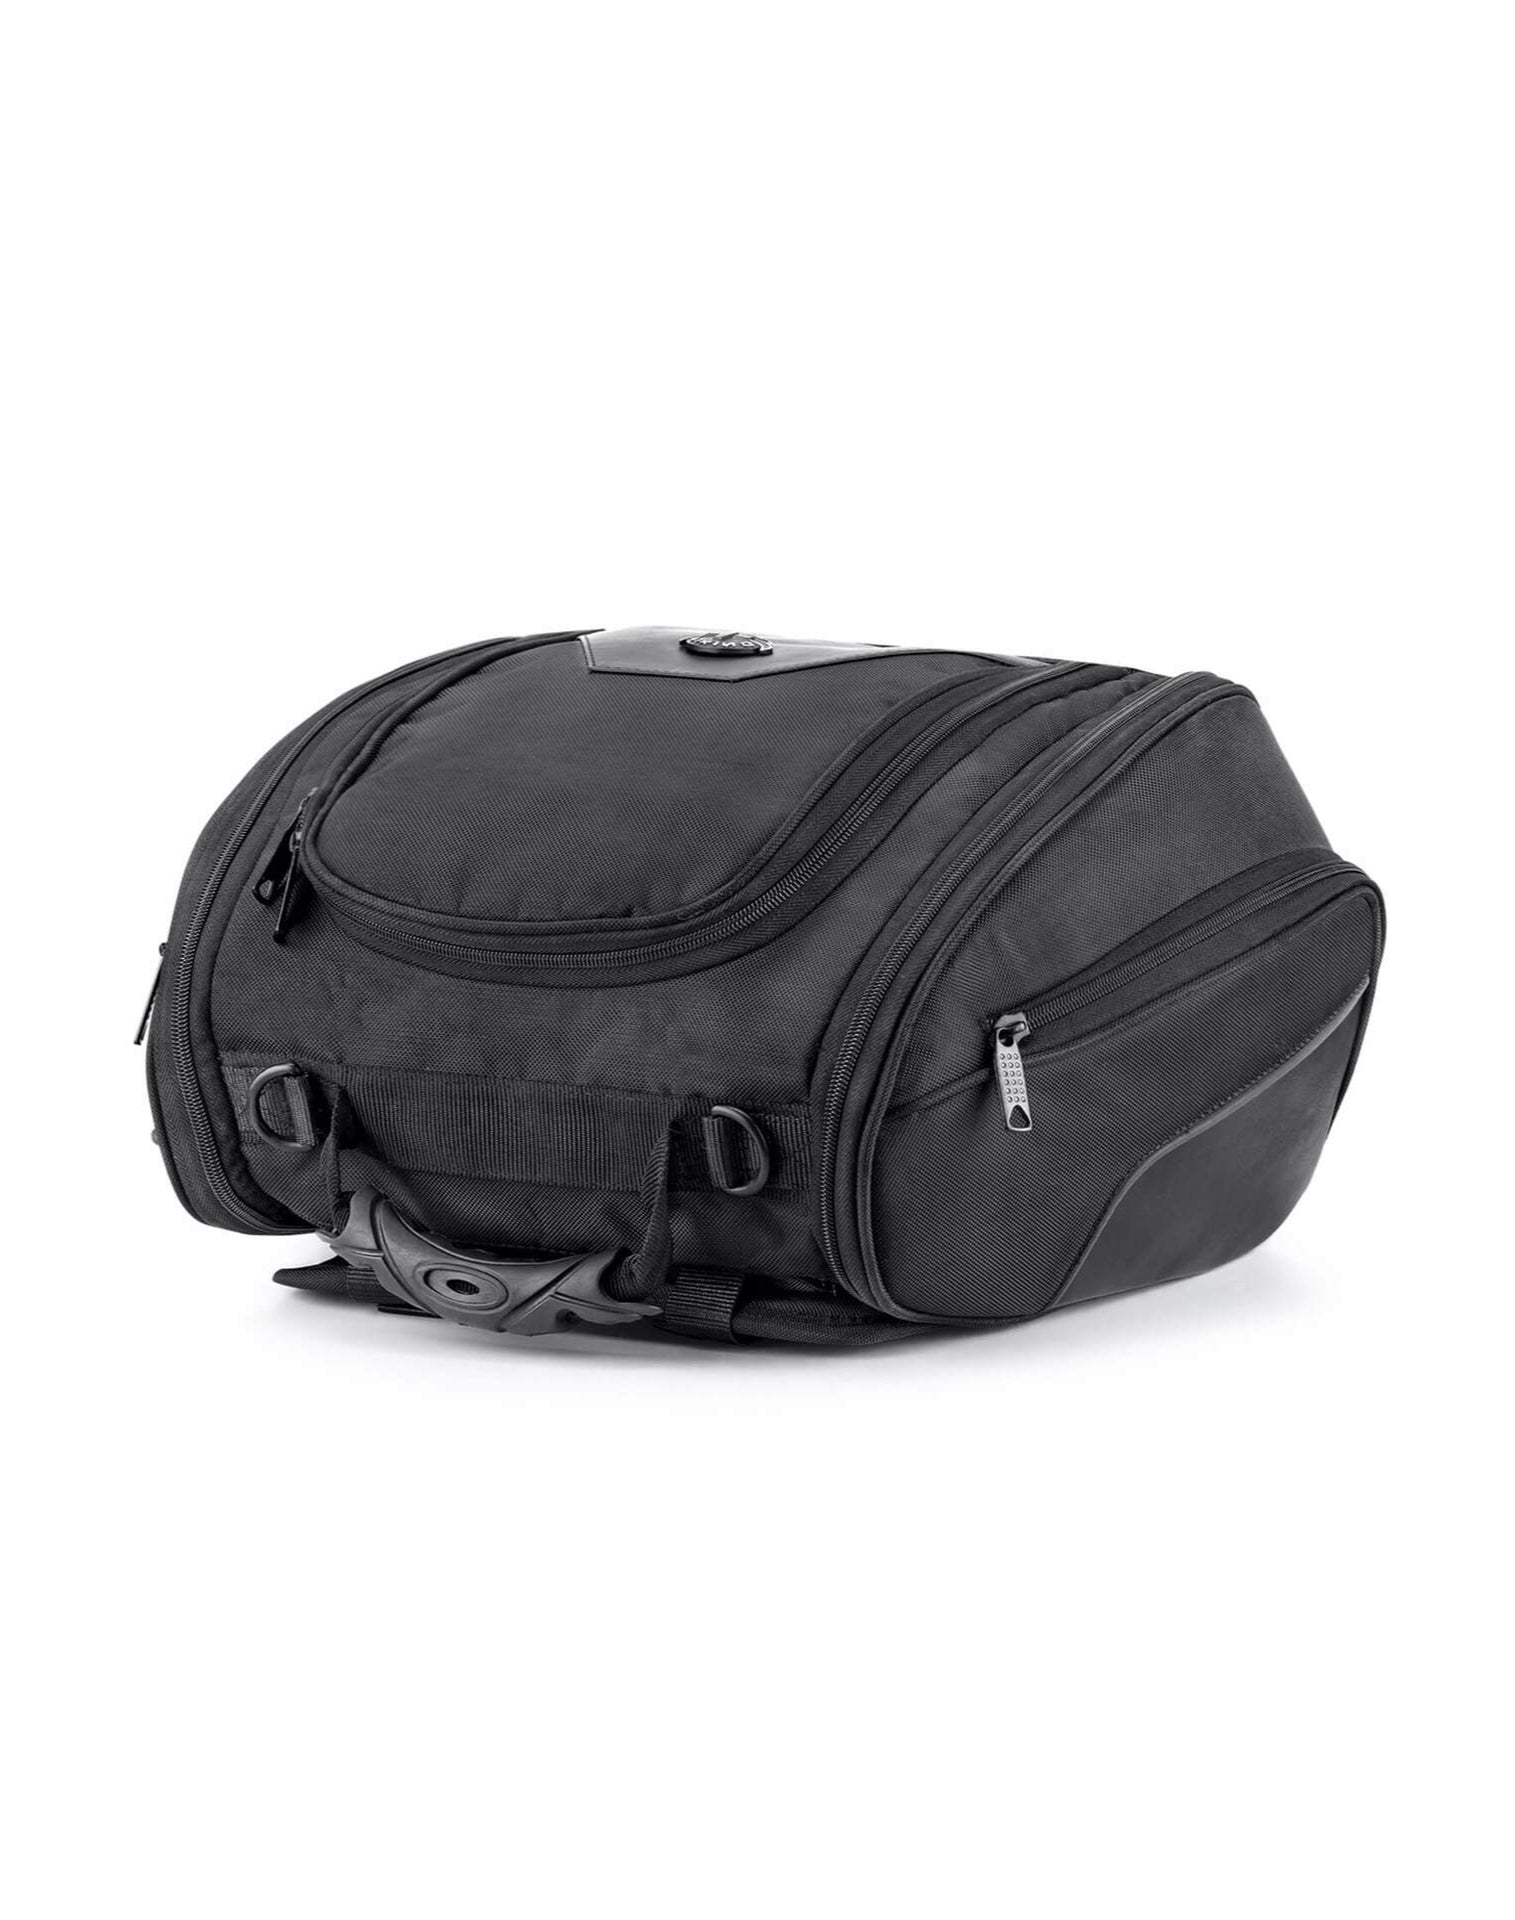 Motorcycle Tail Bags. Best Waterproof Tail Bags for Motorcycles - VikingBags